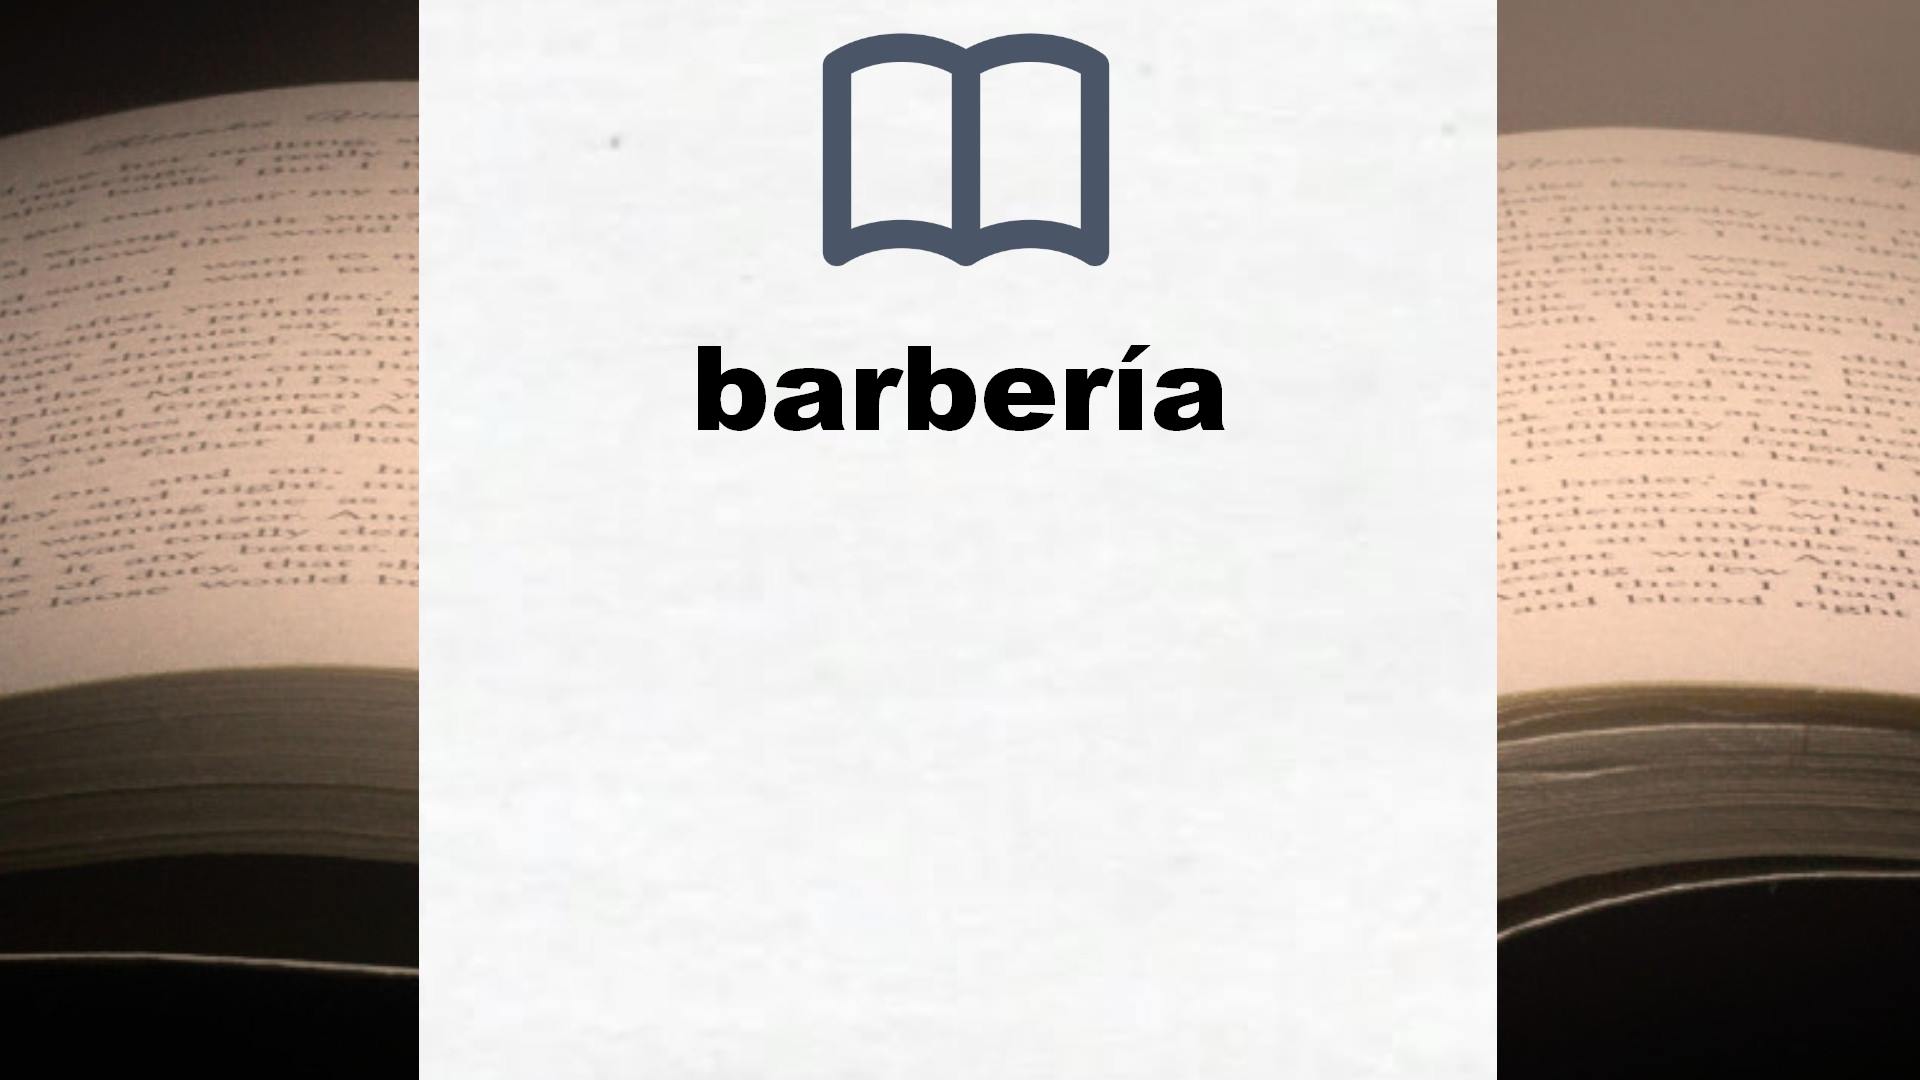 Libros sobre barbería